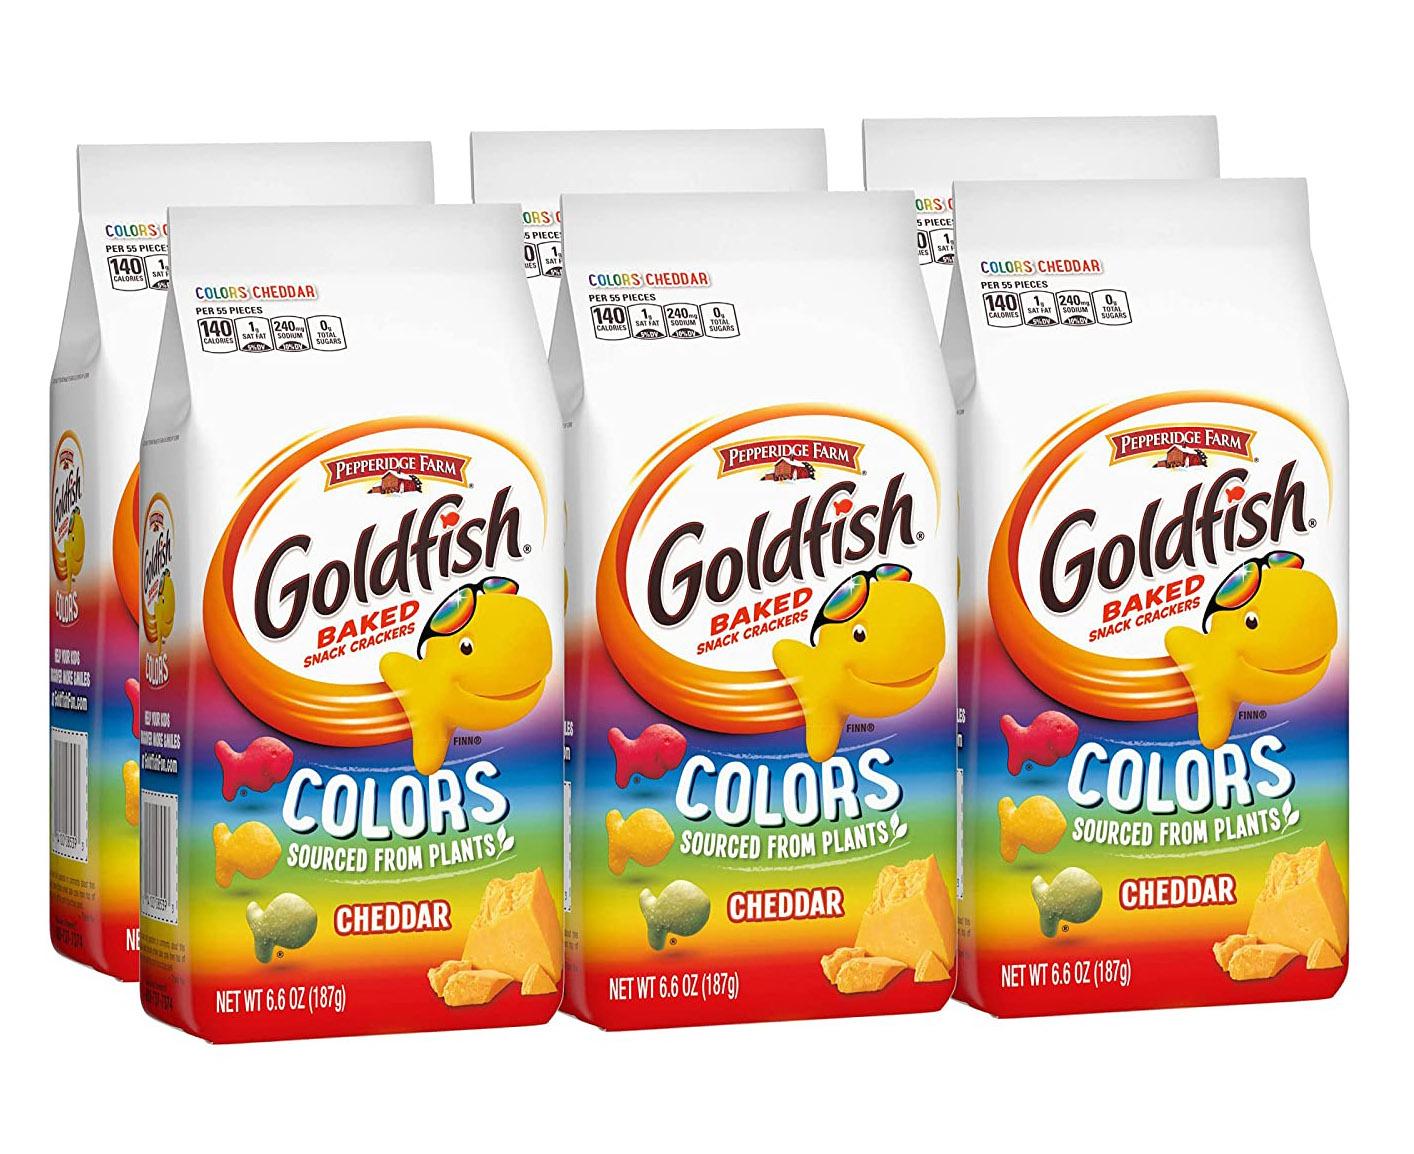 6 Pepperidge Farm Goldfish Colors Cheddar Crackers for $6.03